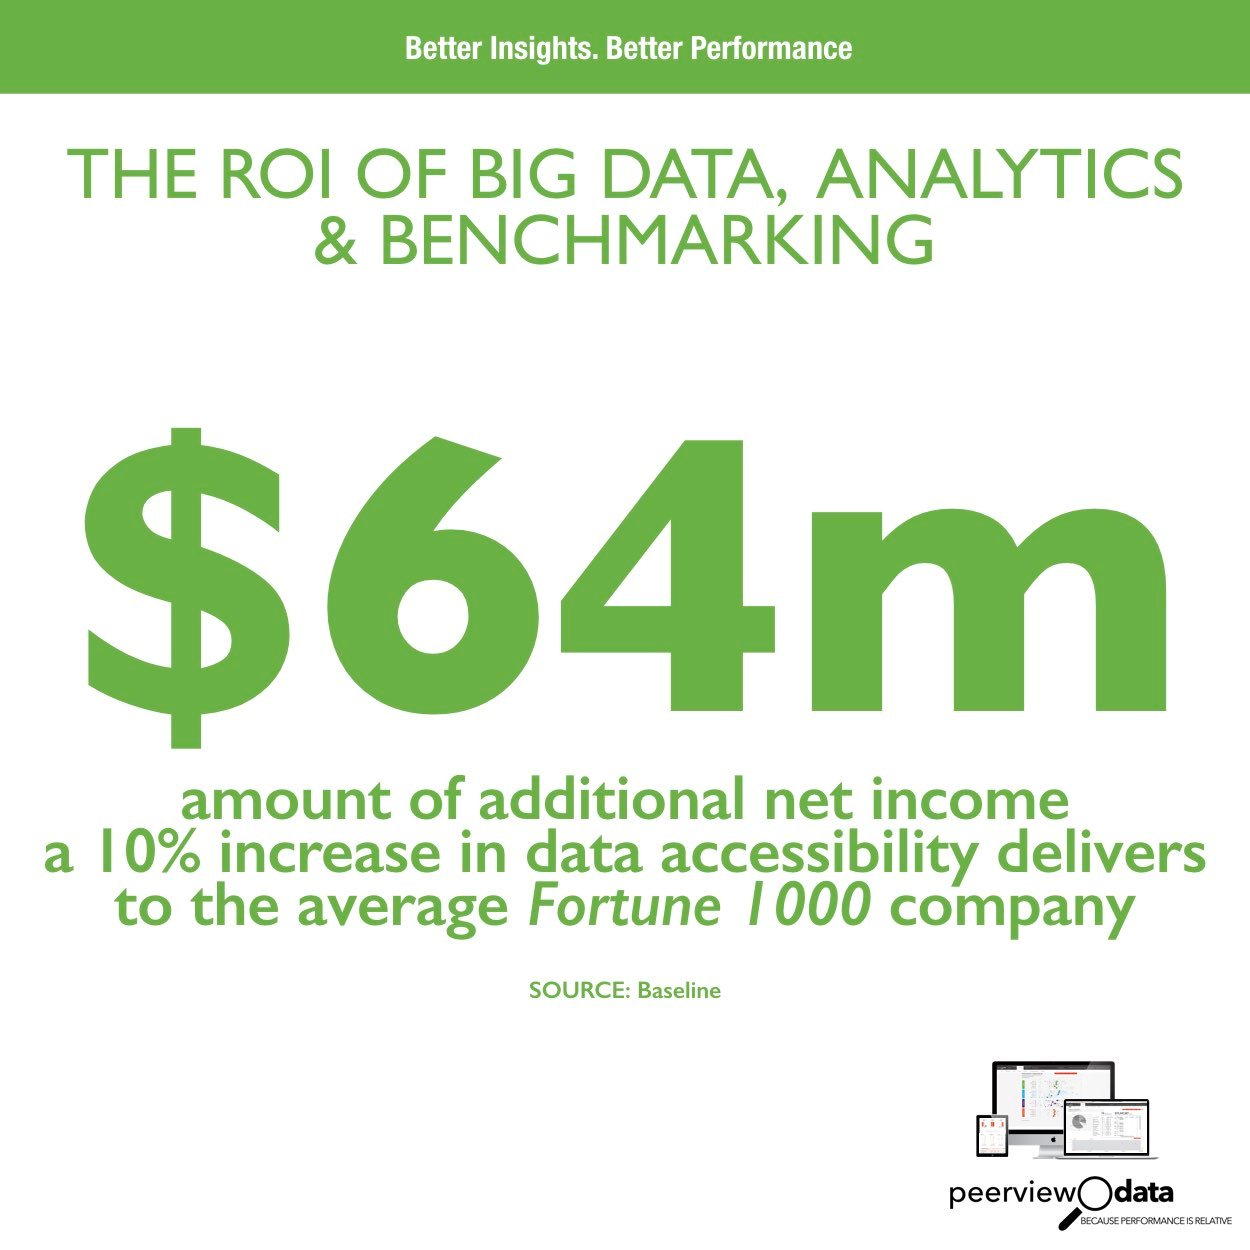 The ROI of Big Data, Analytics & Benchmarking #1